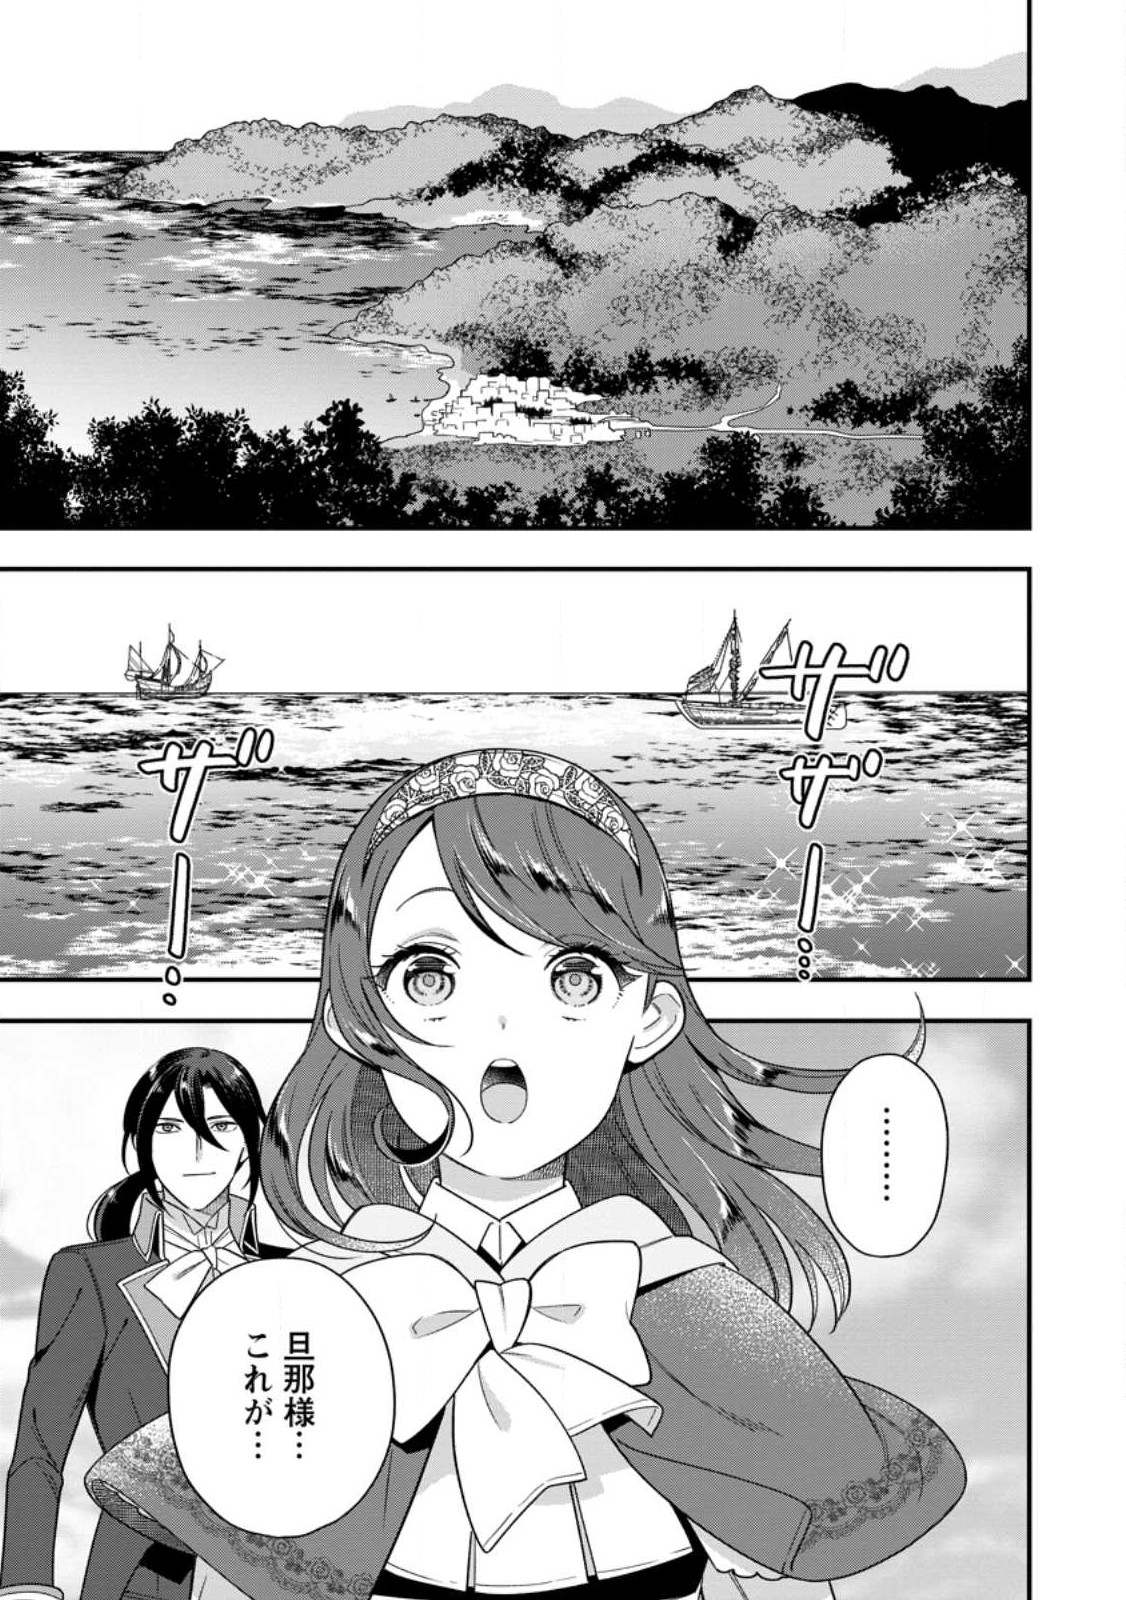 Aisanai to Iwaremashite mo - Chapter 14.1 - Page 3